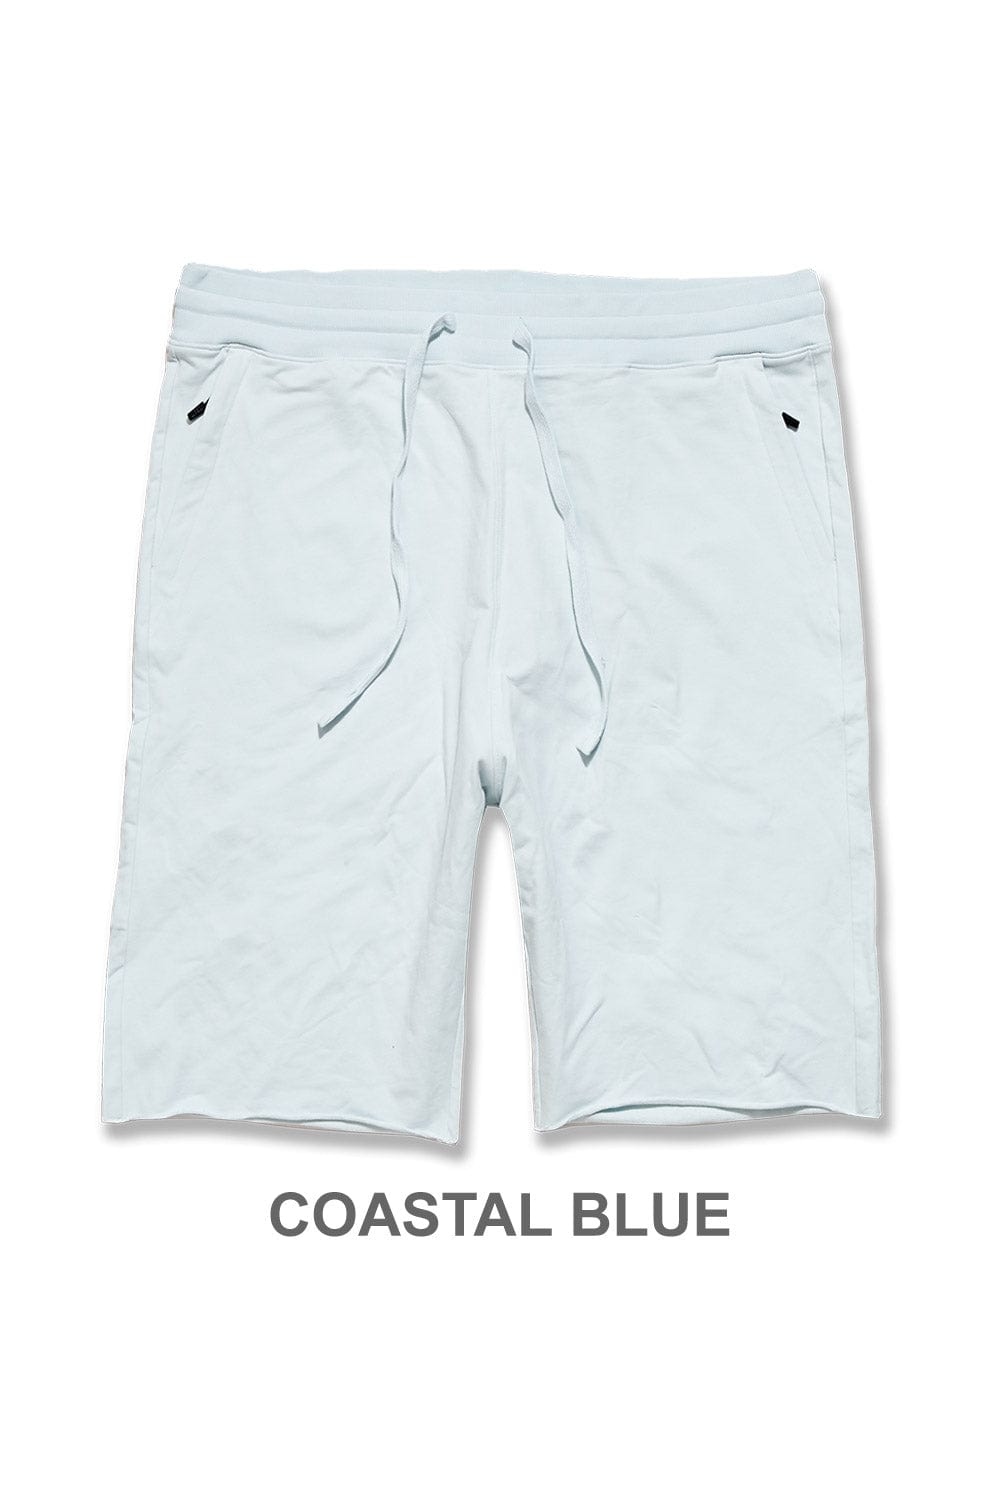 JC Big Men Big Men's OG Palma French Terry Shorts Coastal Blue / 4XL